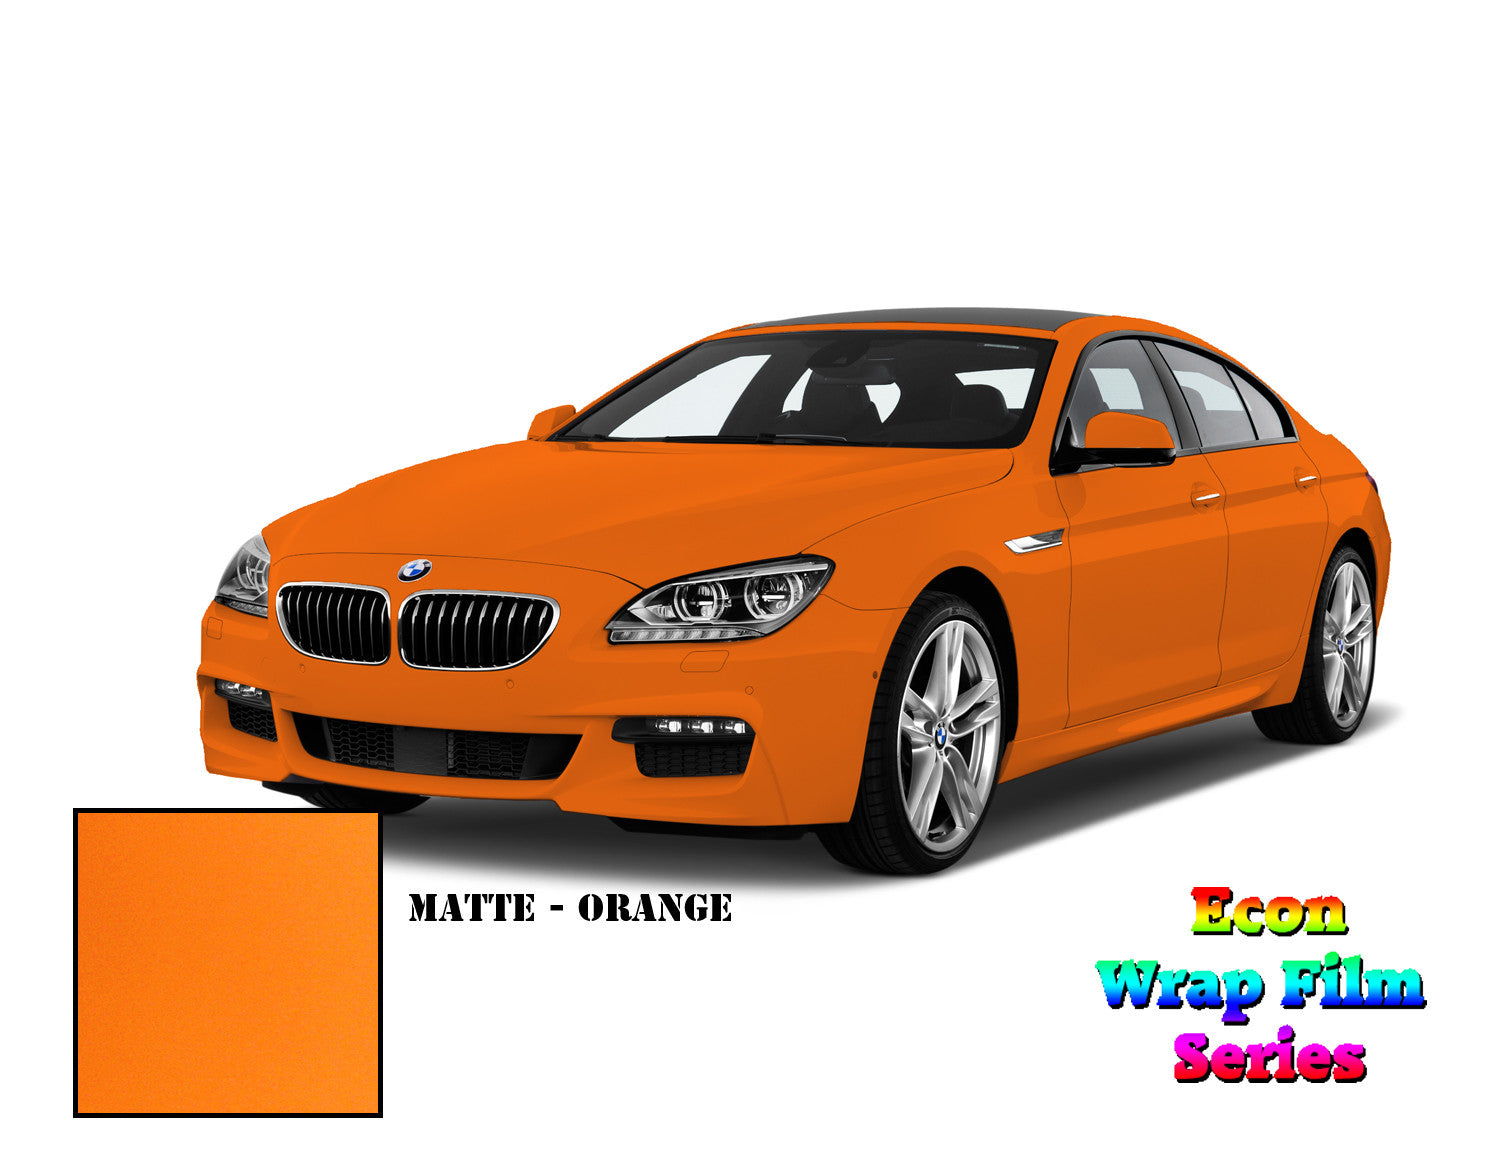 Econ Wrap Film Series - Matte Orange - Hachi Auto